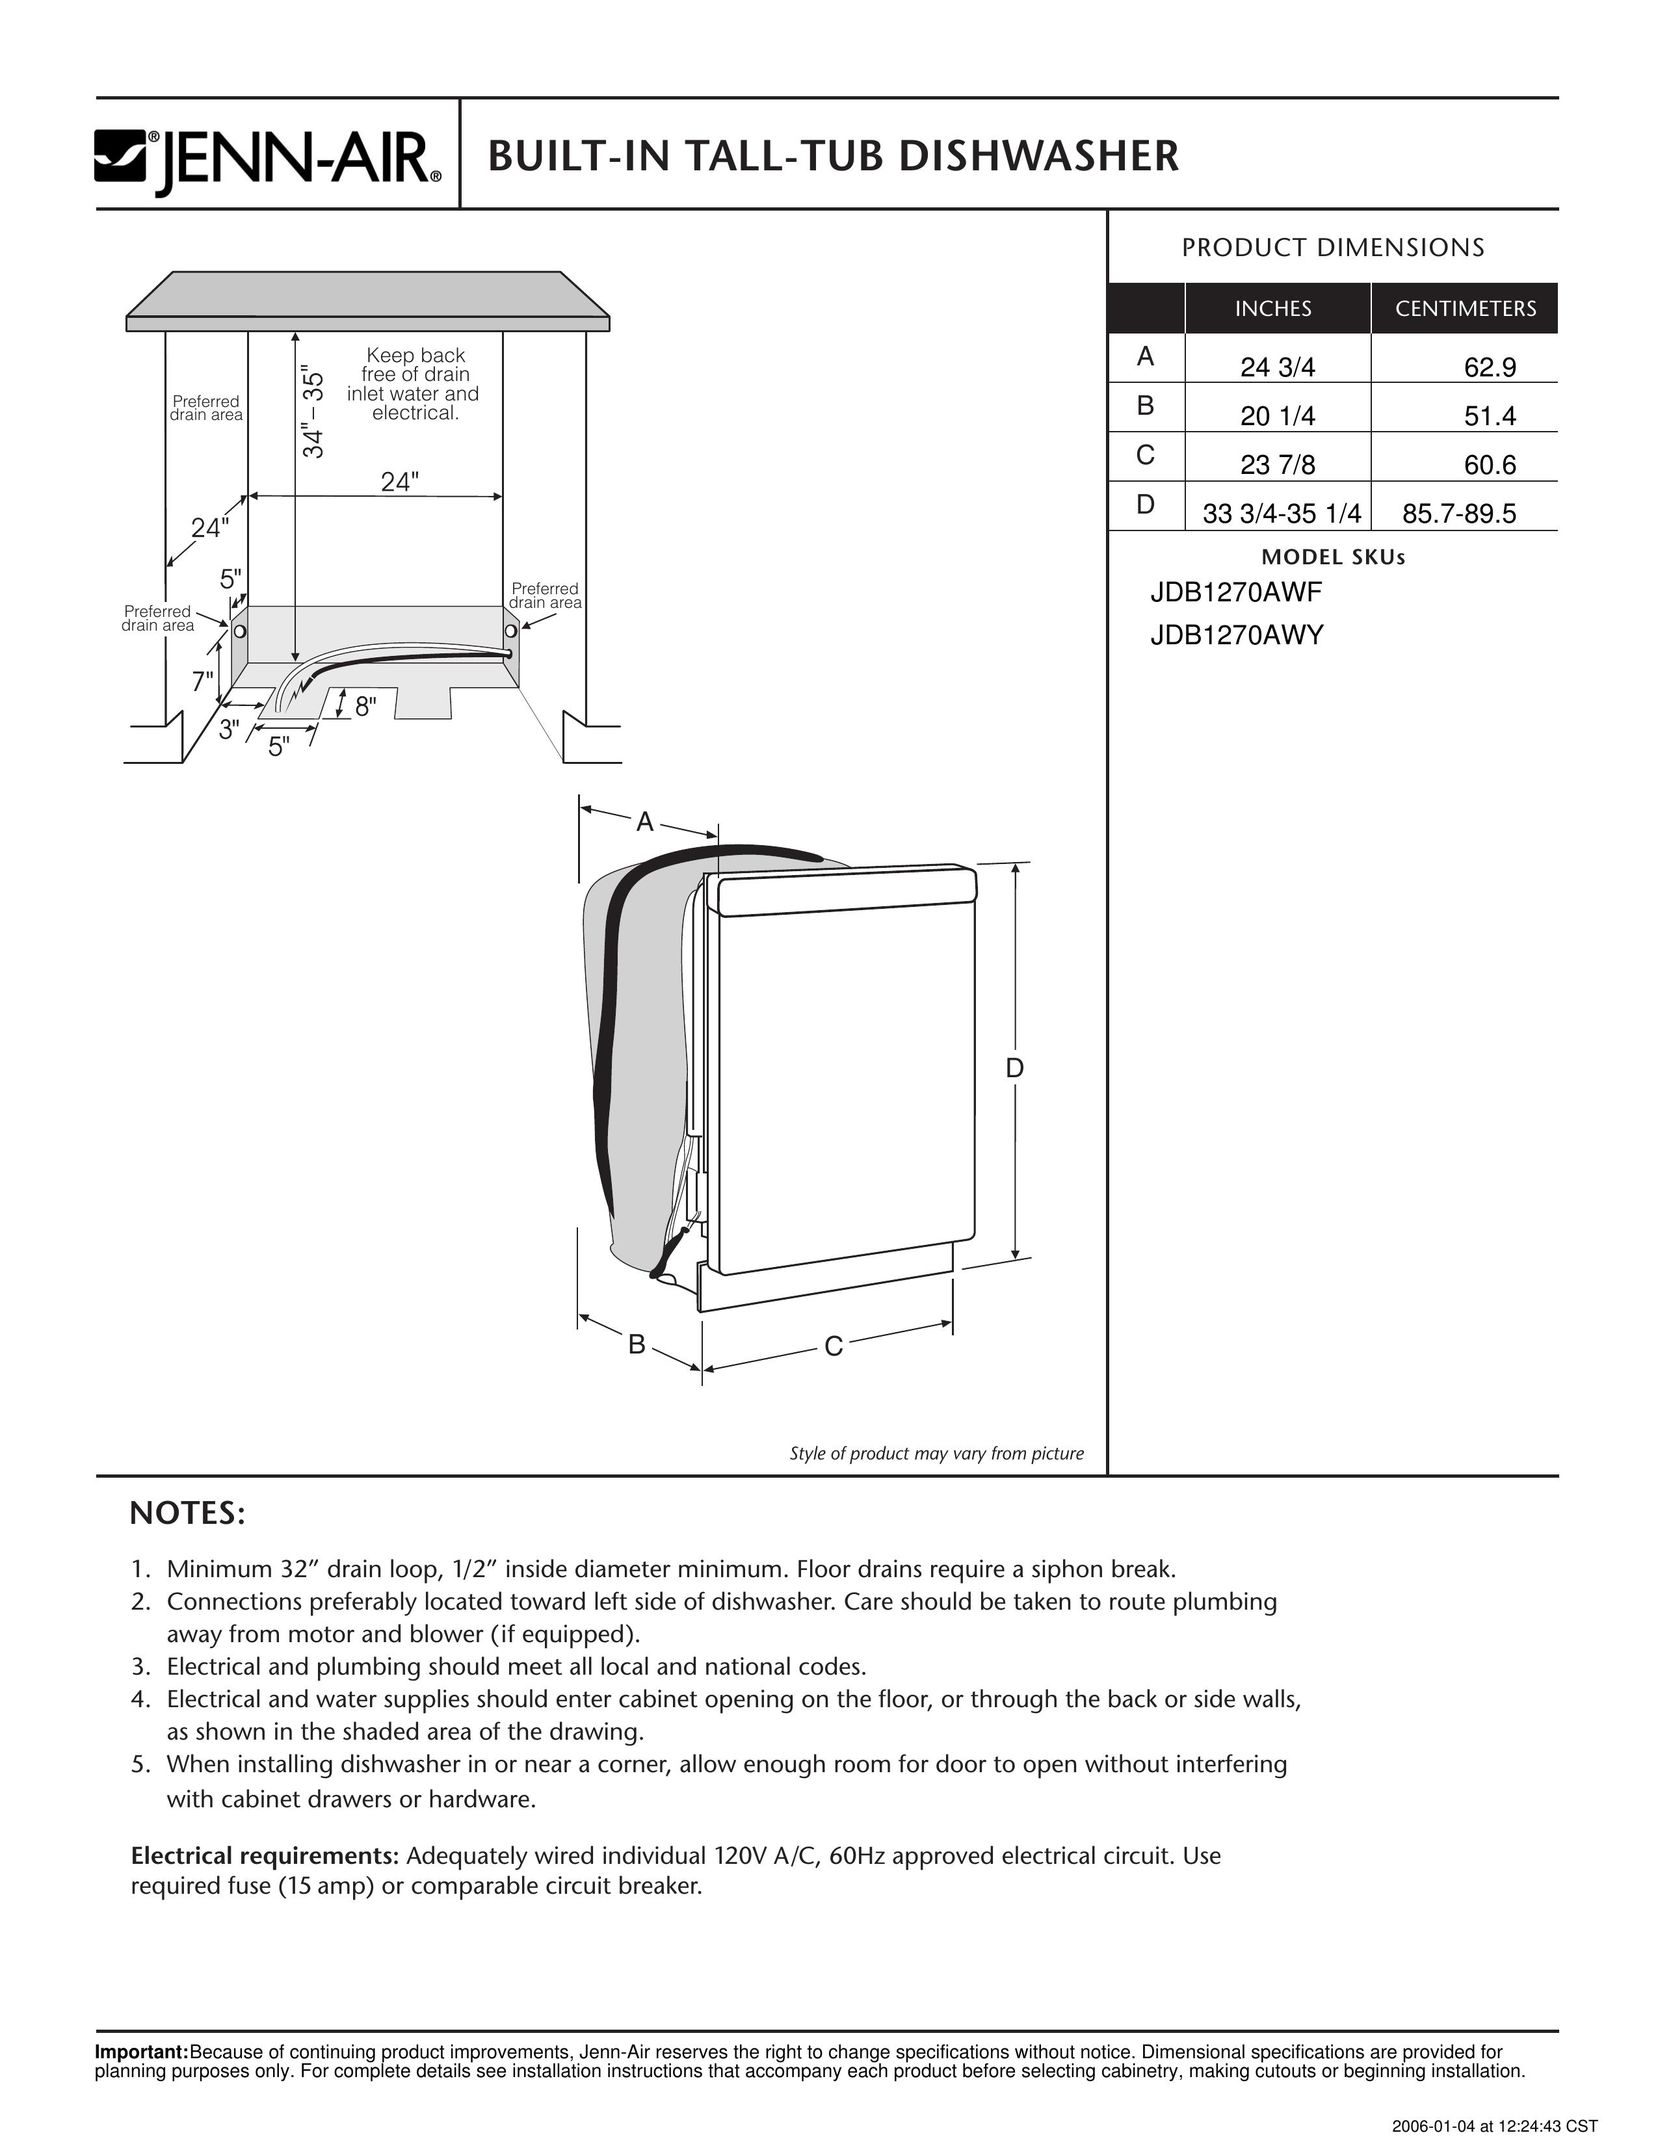 Jenn-Air JDB1270AWF Dishwasher User Manual